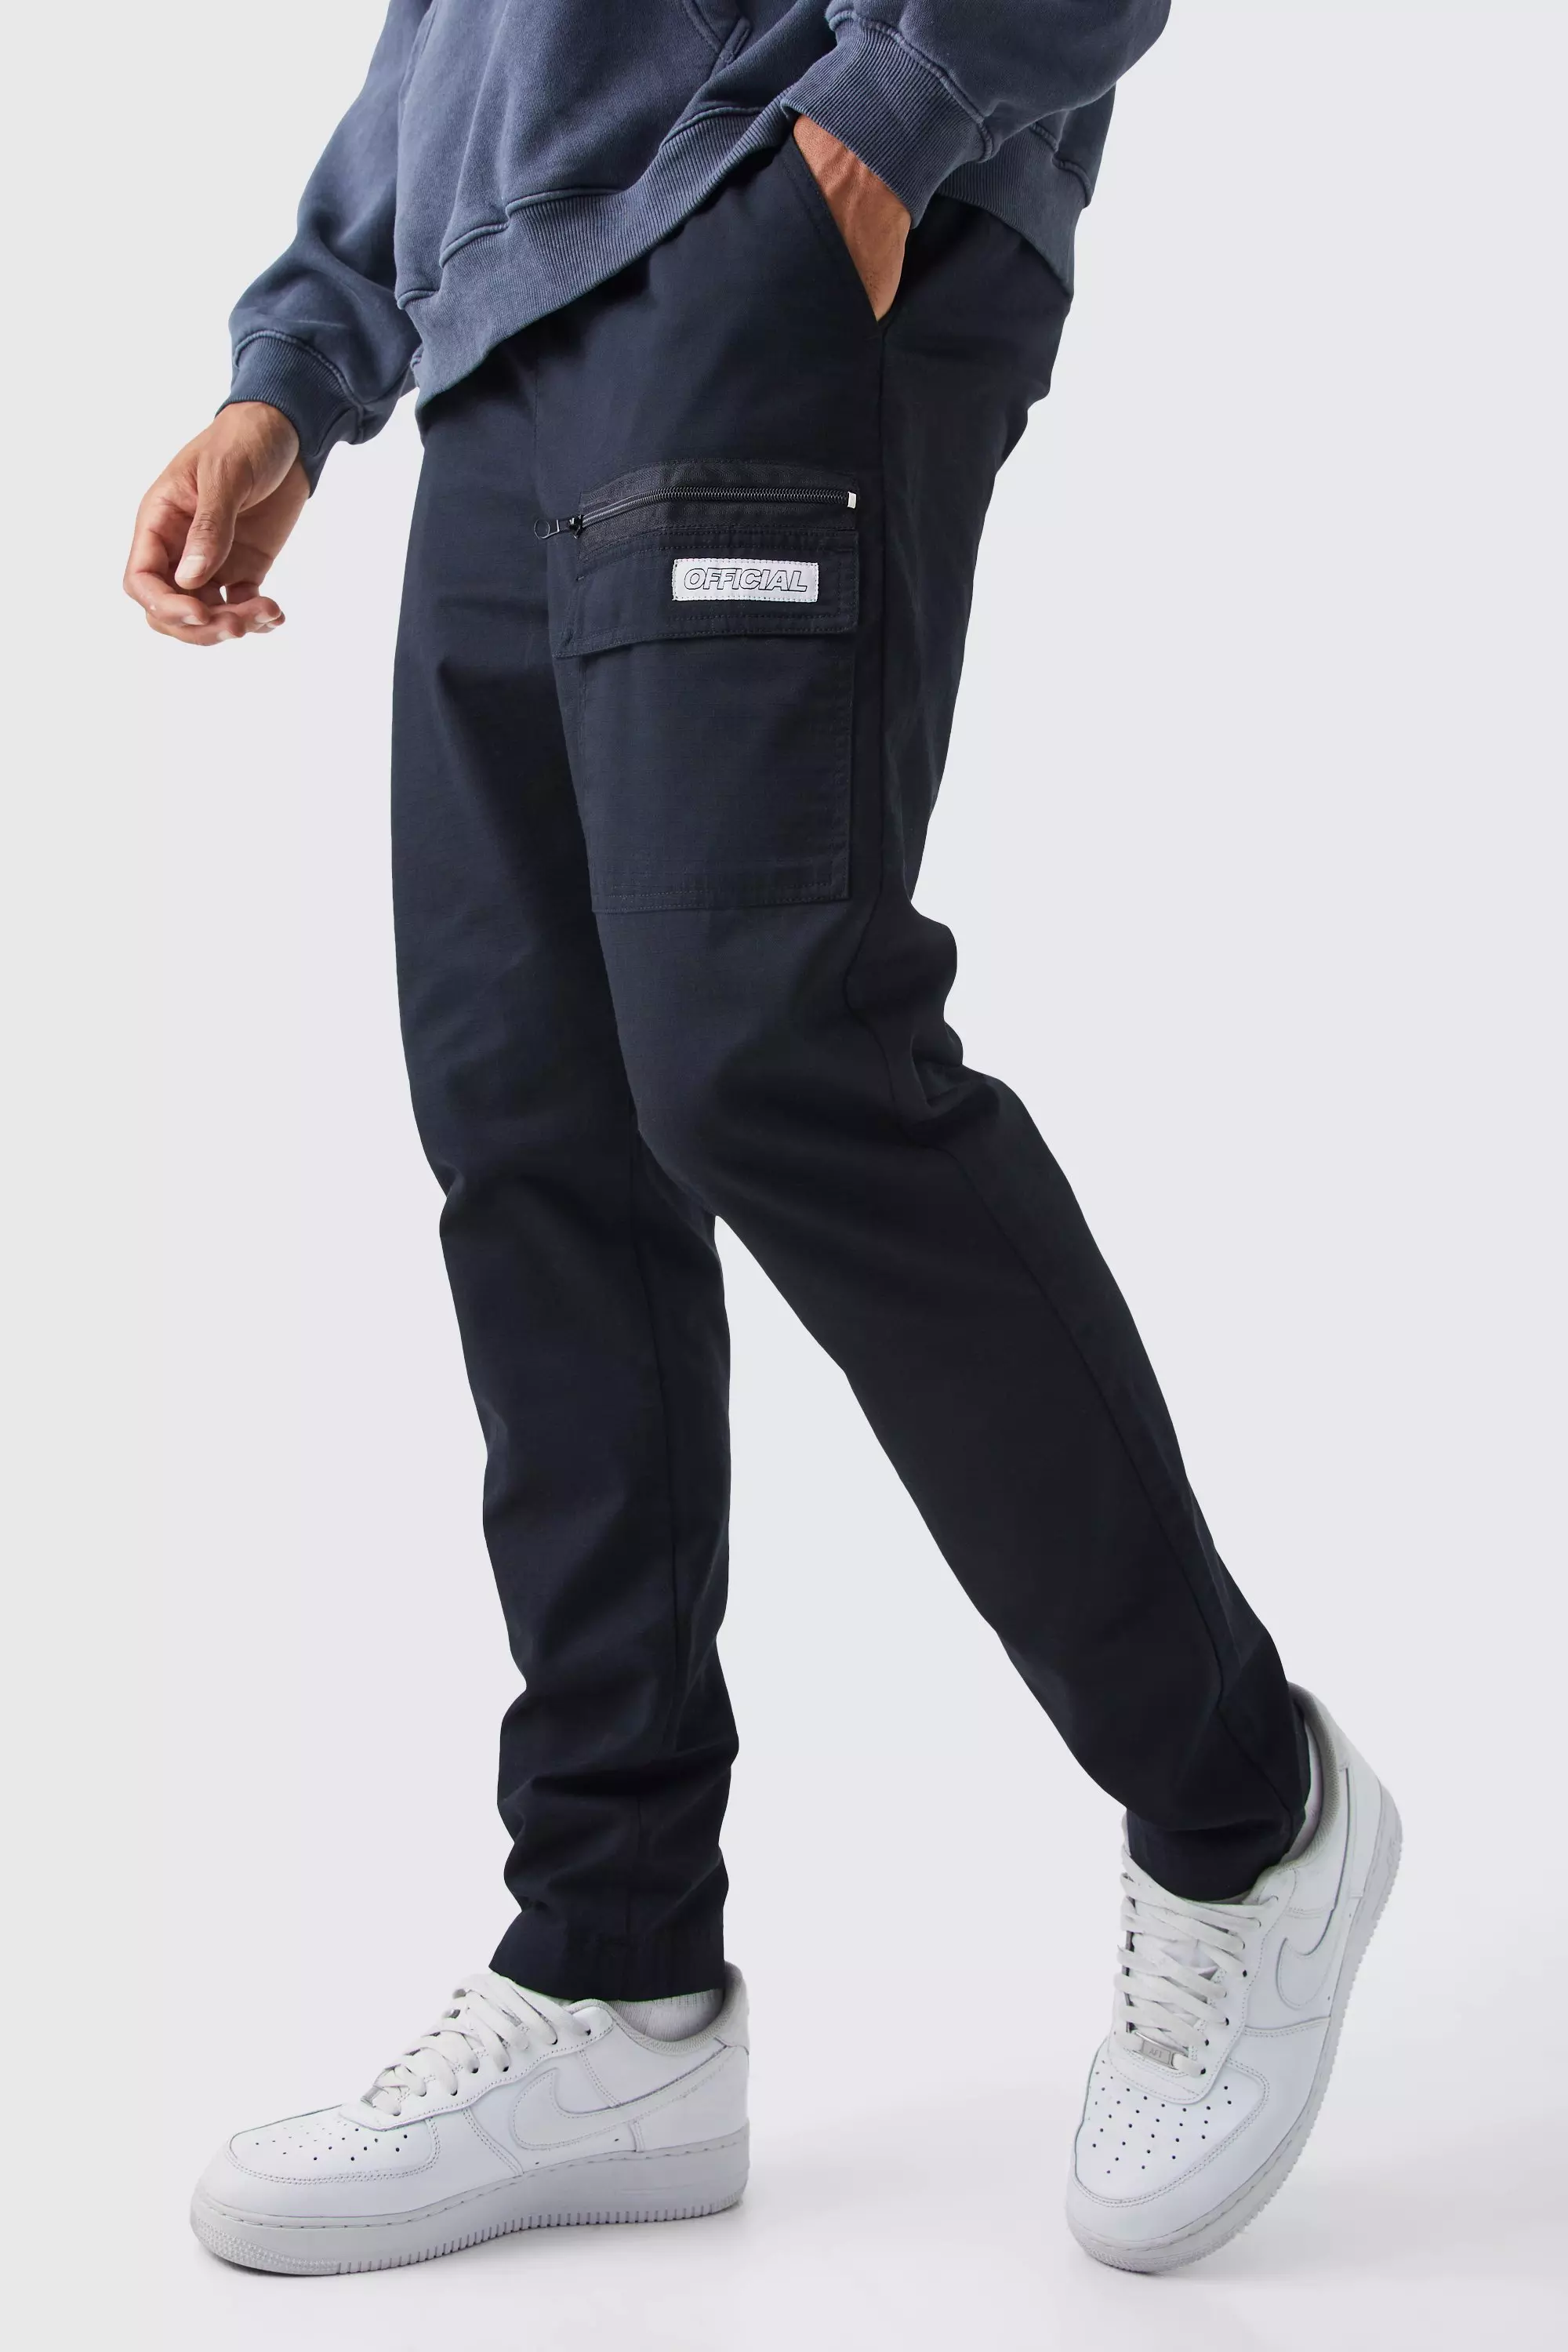 Black Designer Cargo Sweatpants - XXL